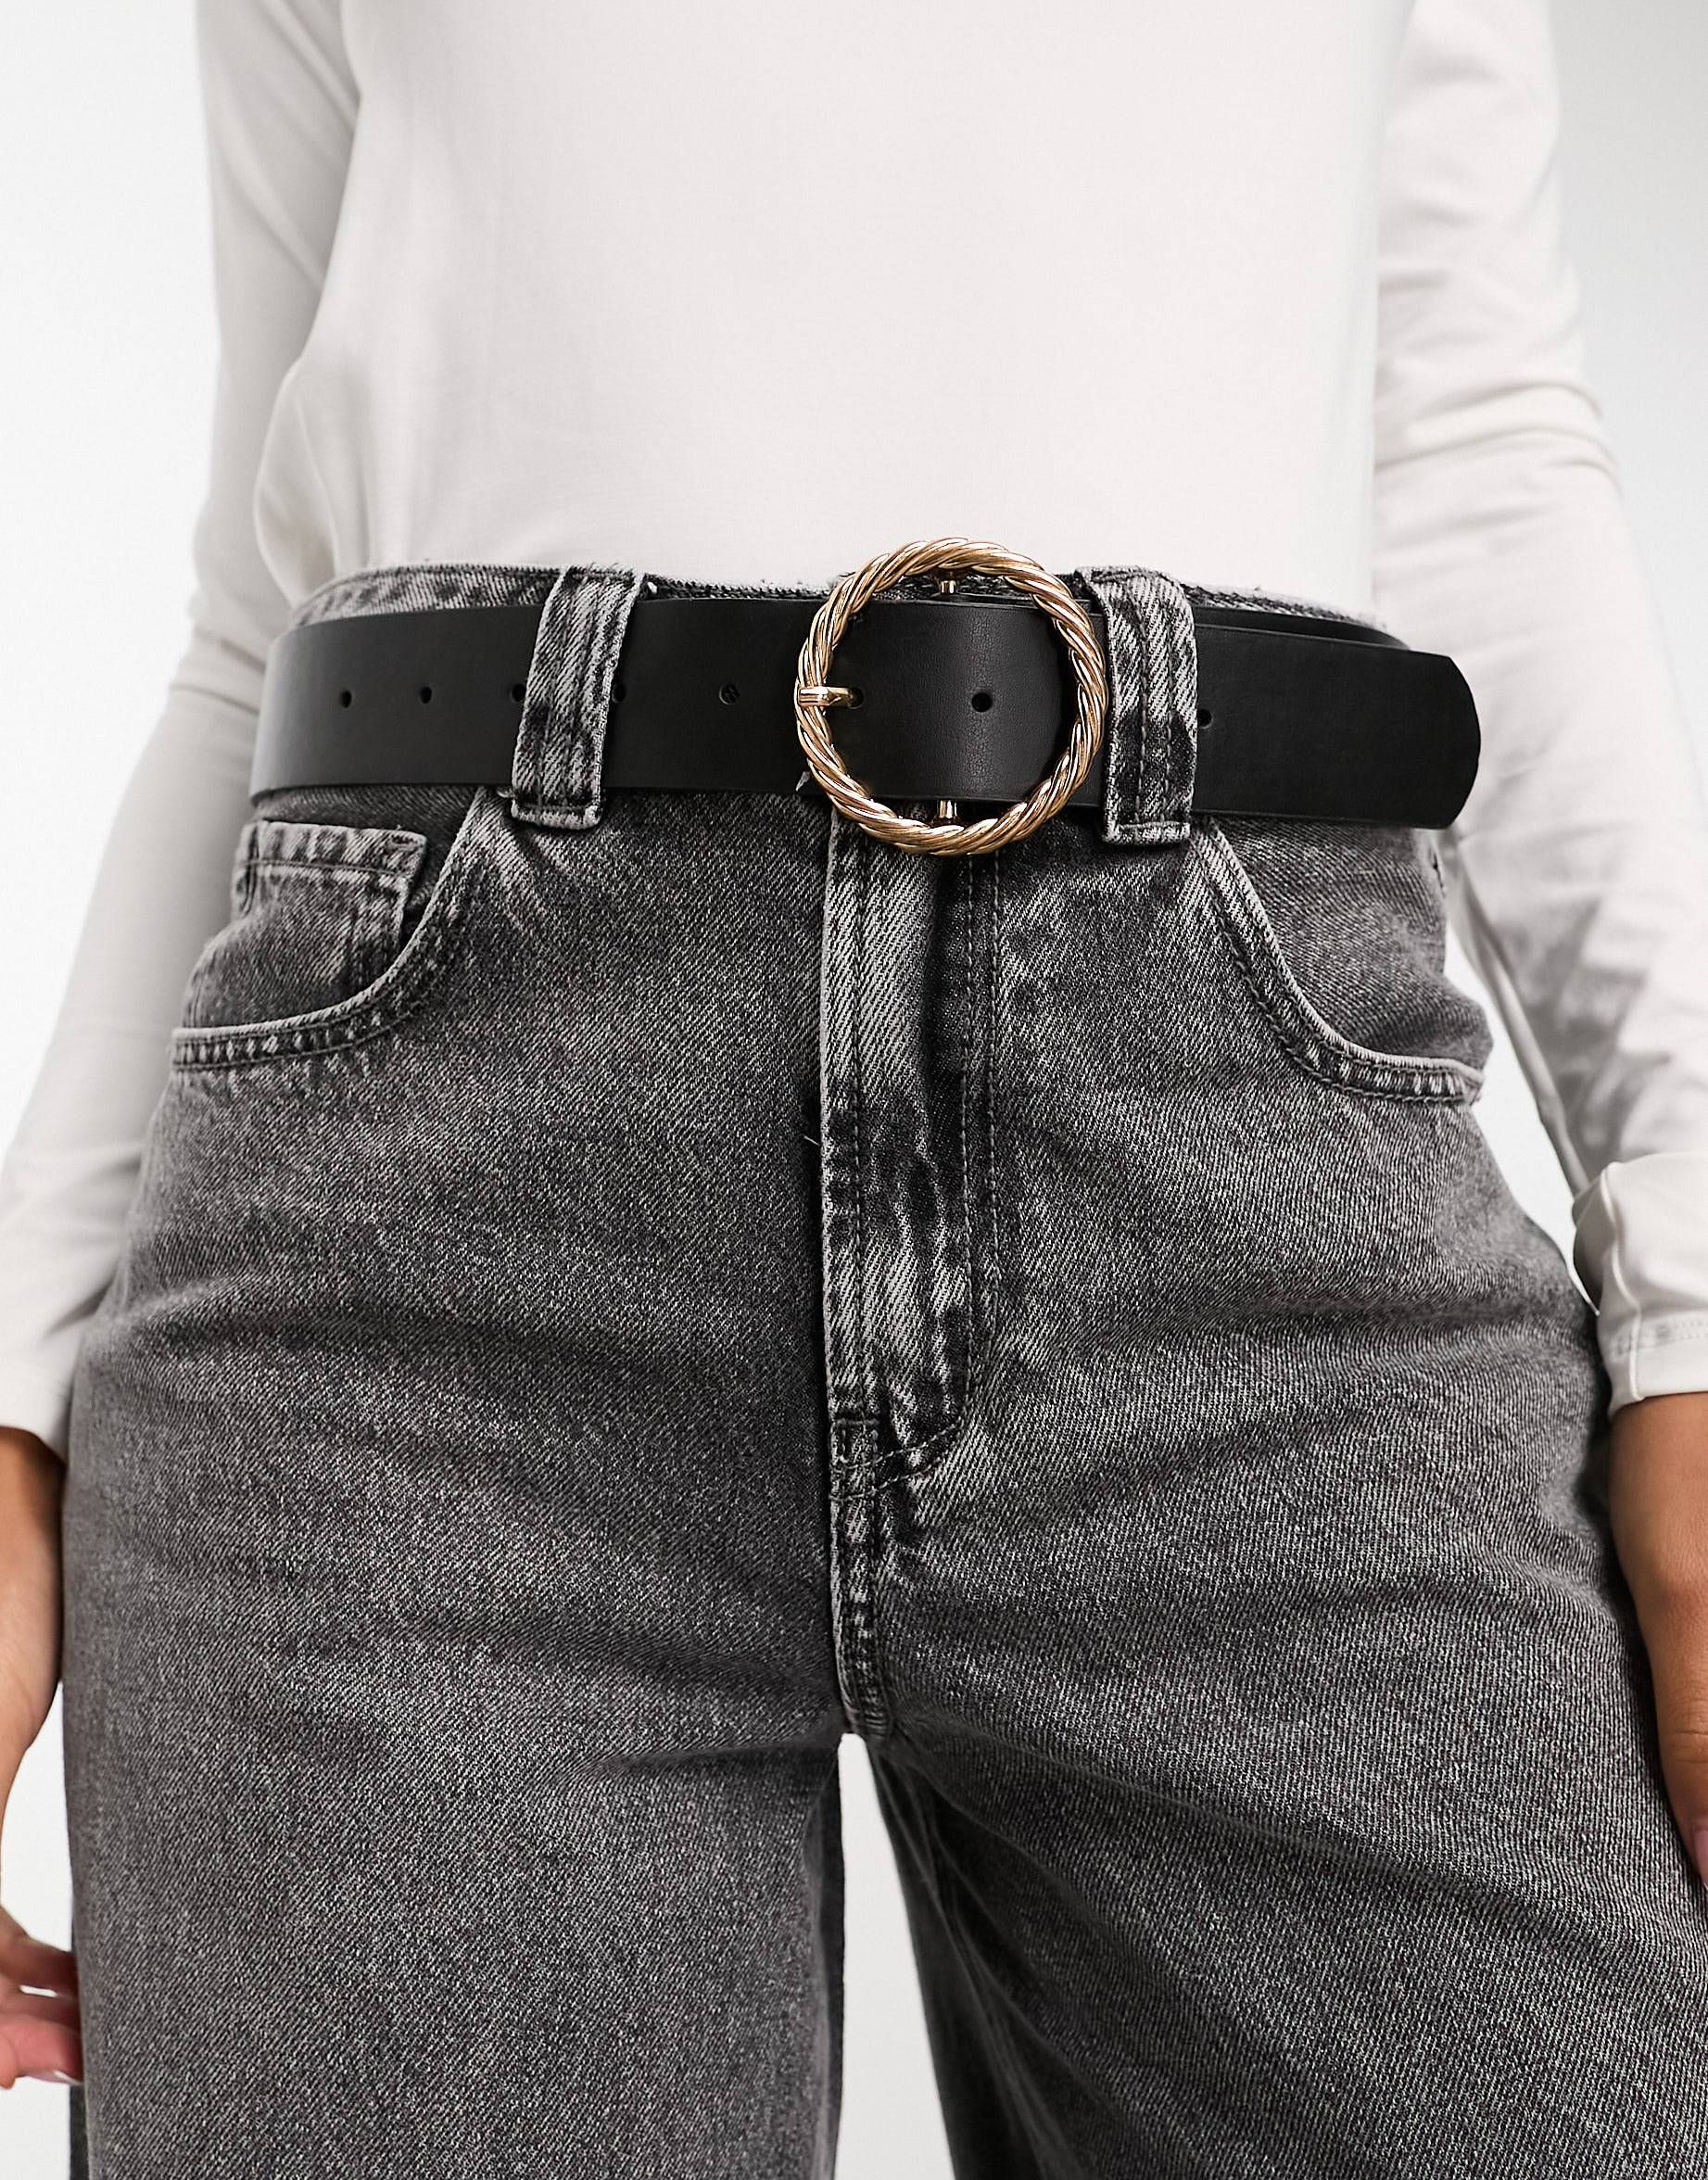 ASOS DESIGN gold twist buckle waist and hip jeans belt in black | ASOS (Global)